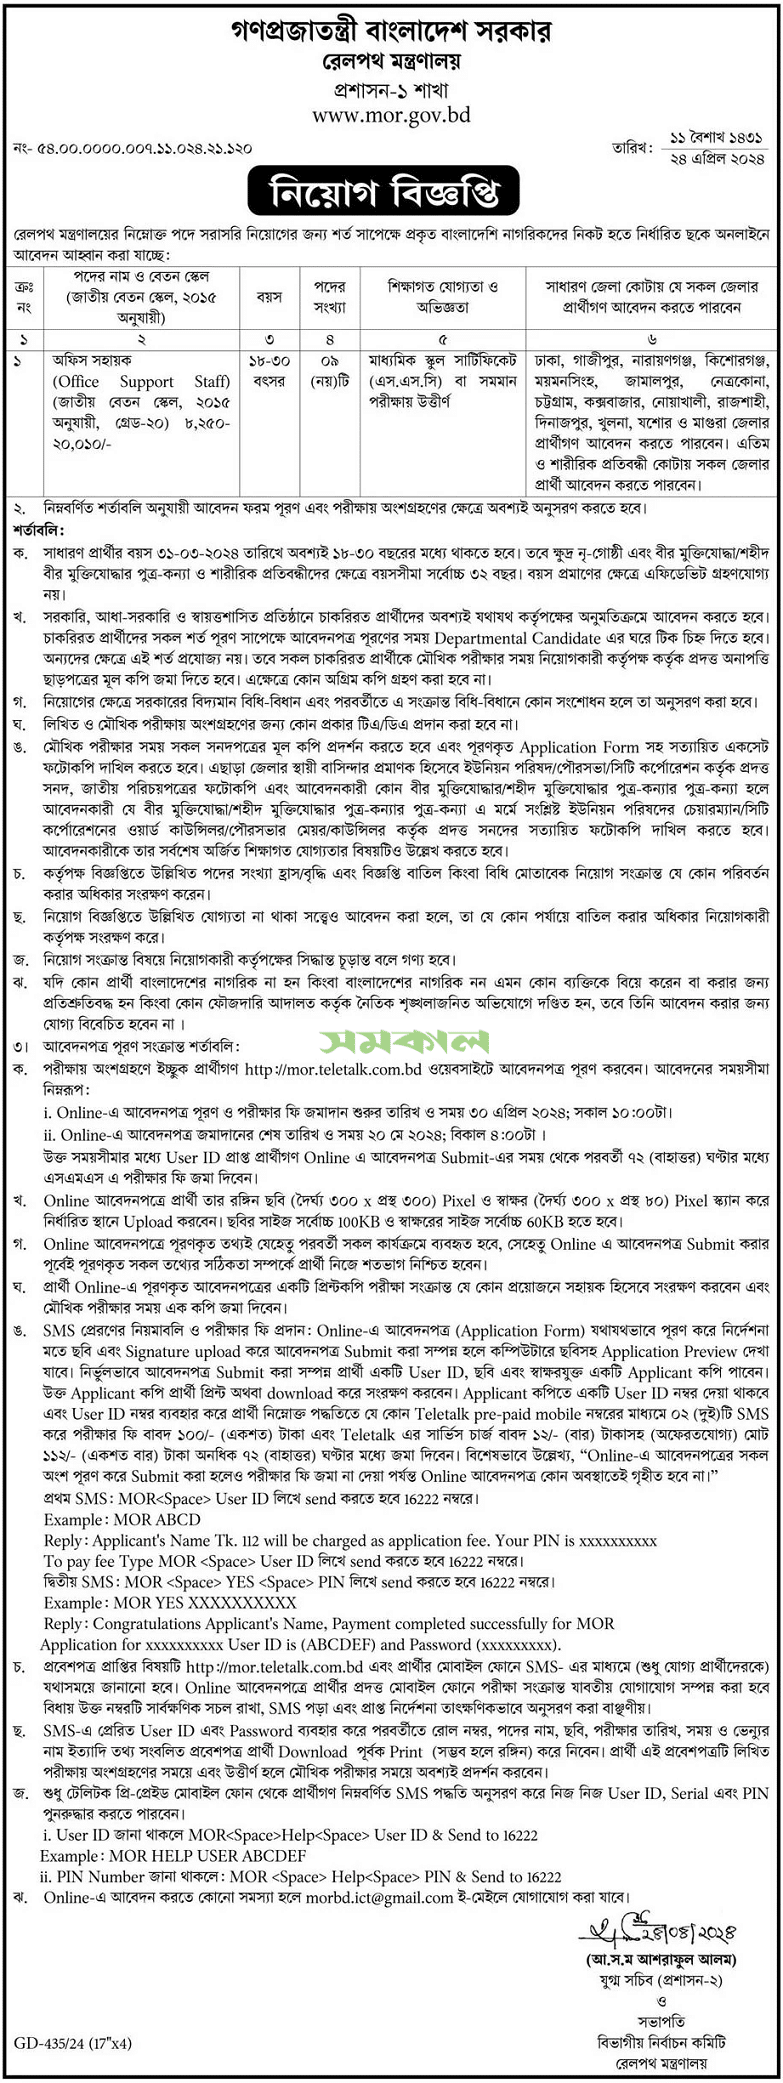 Ministry of Railways Job Circular